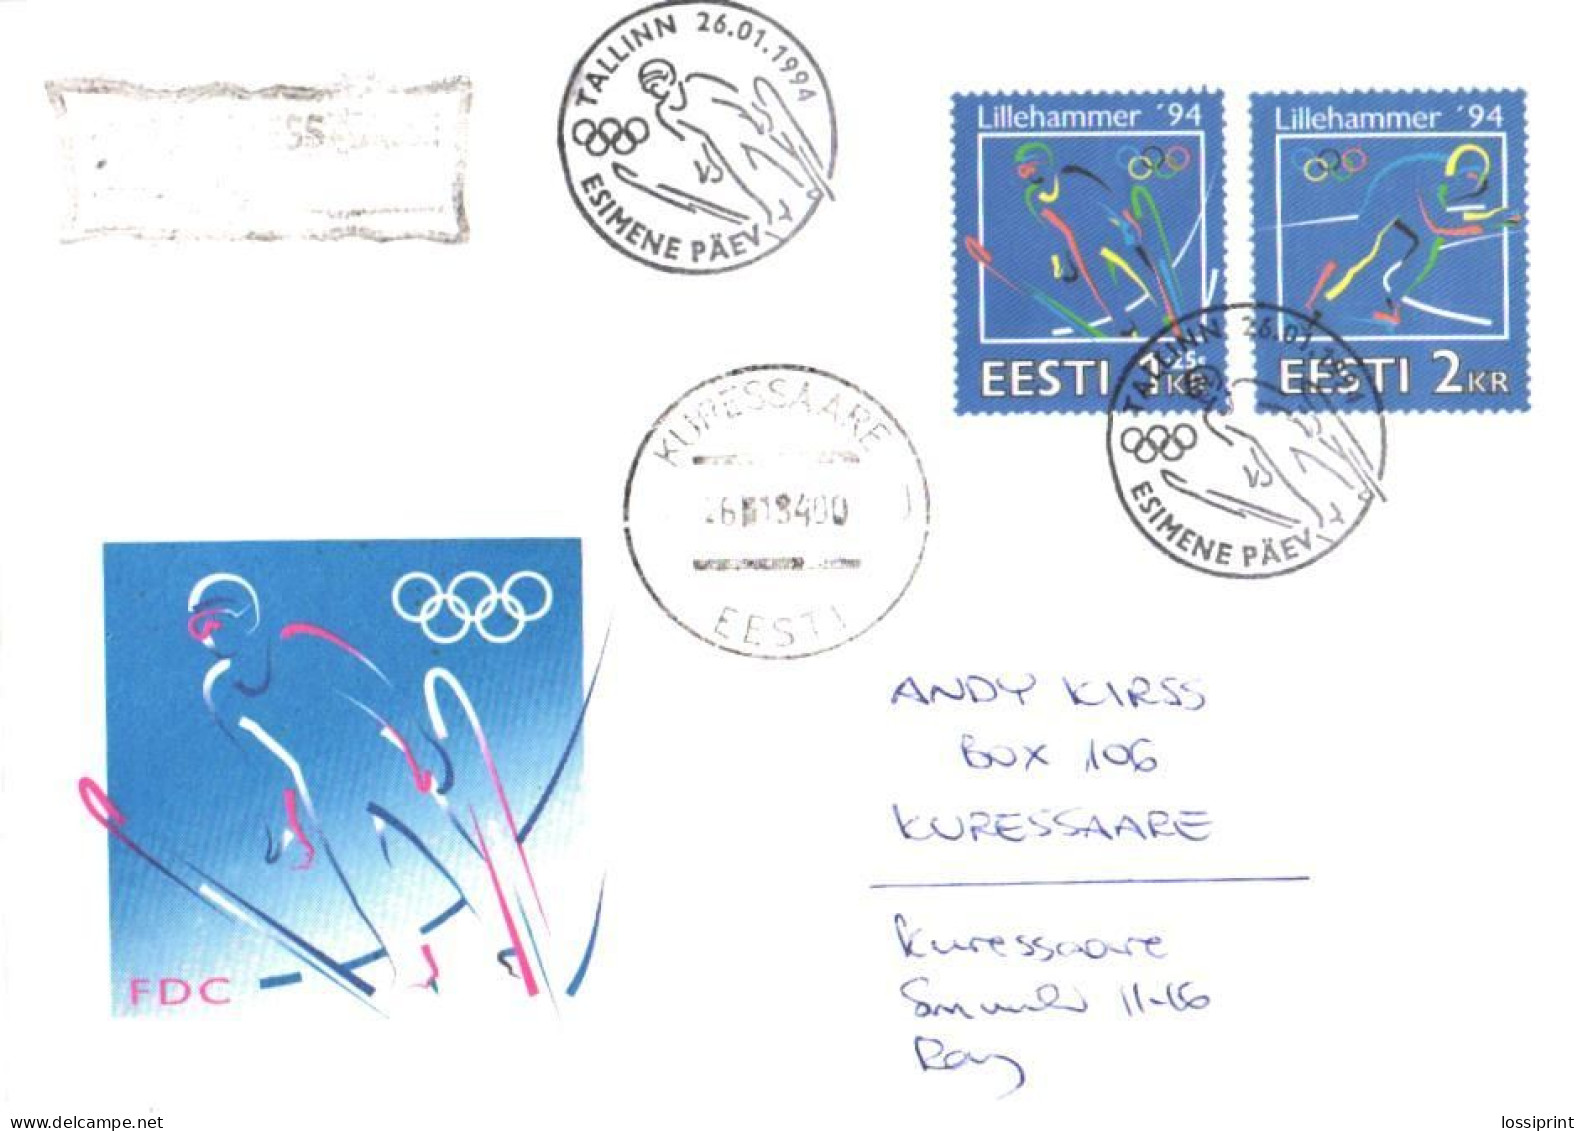 Estonia:FDC, Lillehammer Olympic Games, Registered Letter, 1994 - Estland